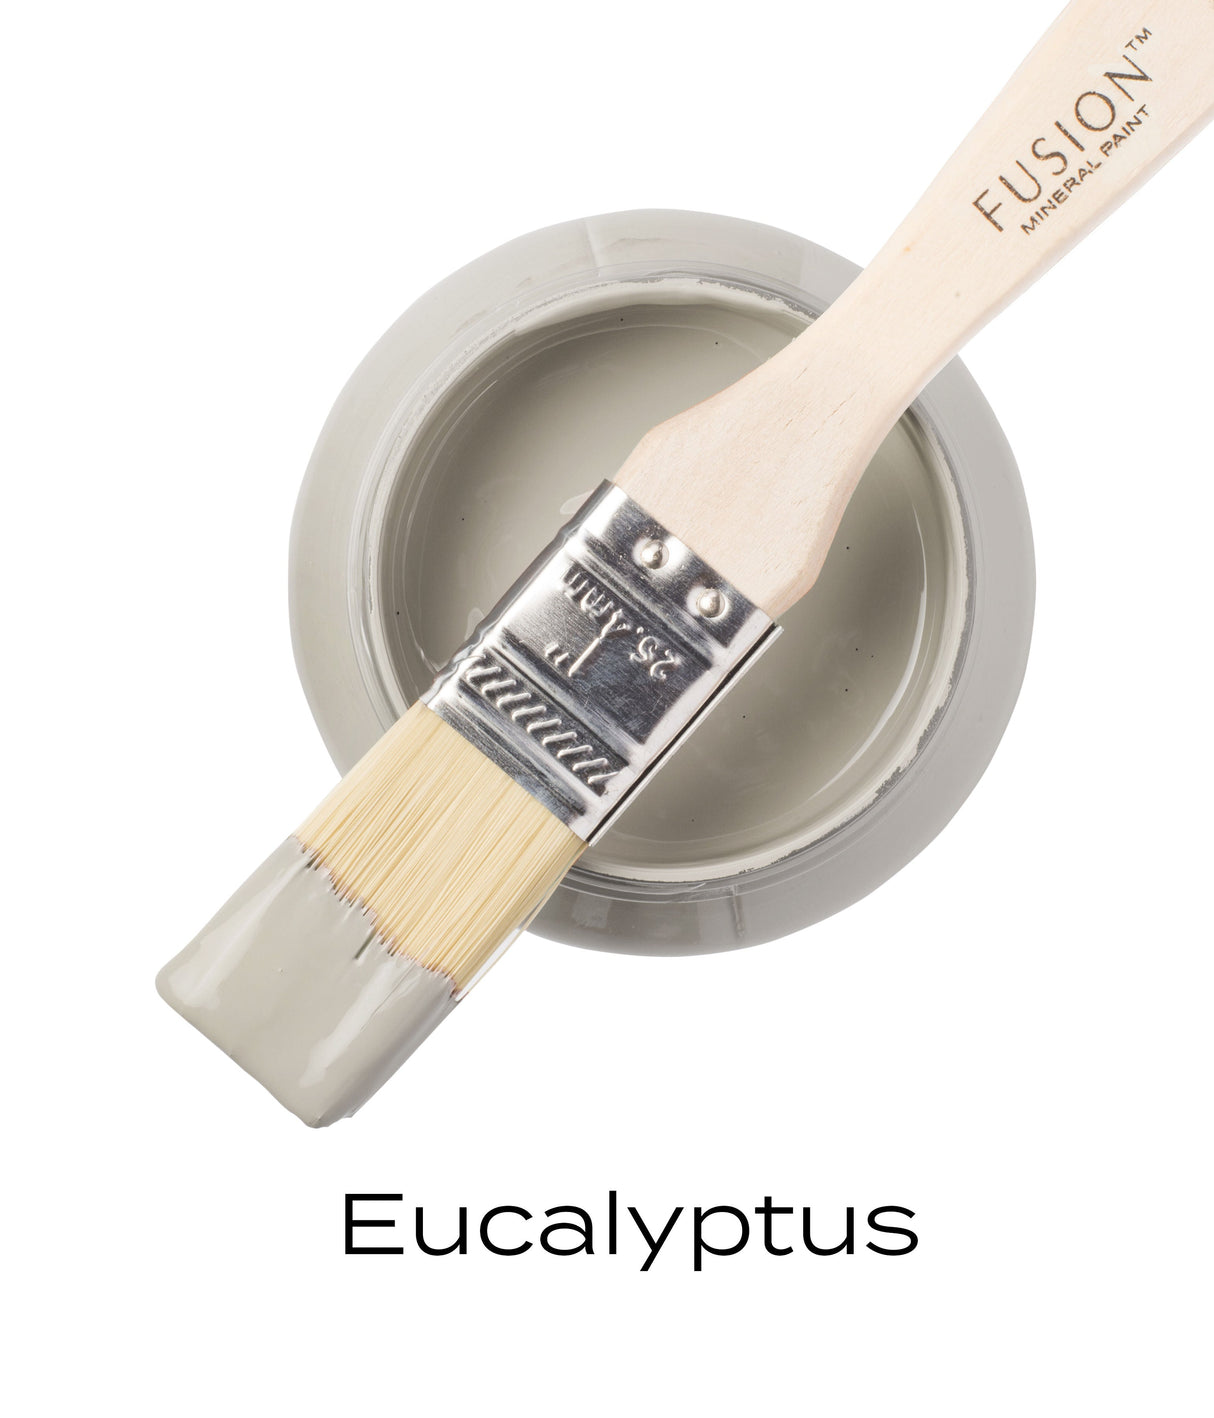 Eucalyptus Fusion Mineral Paint @ Painted Heirloom